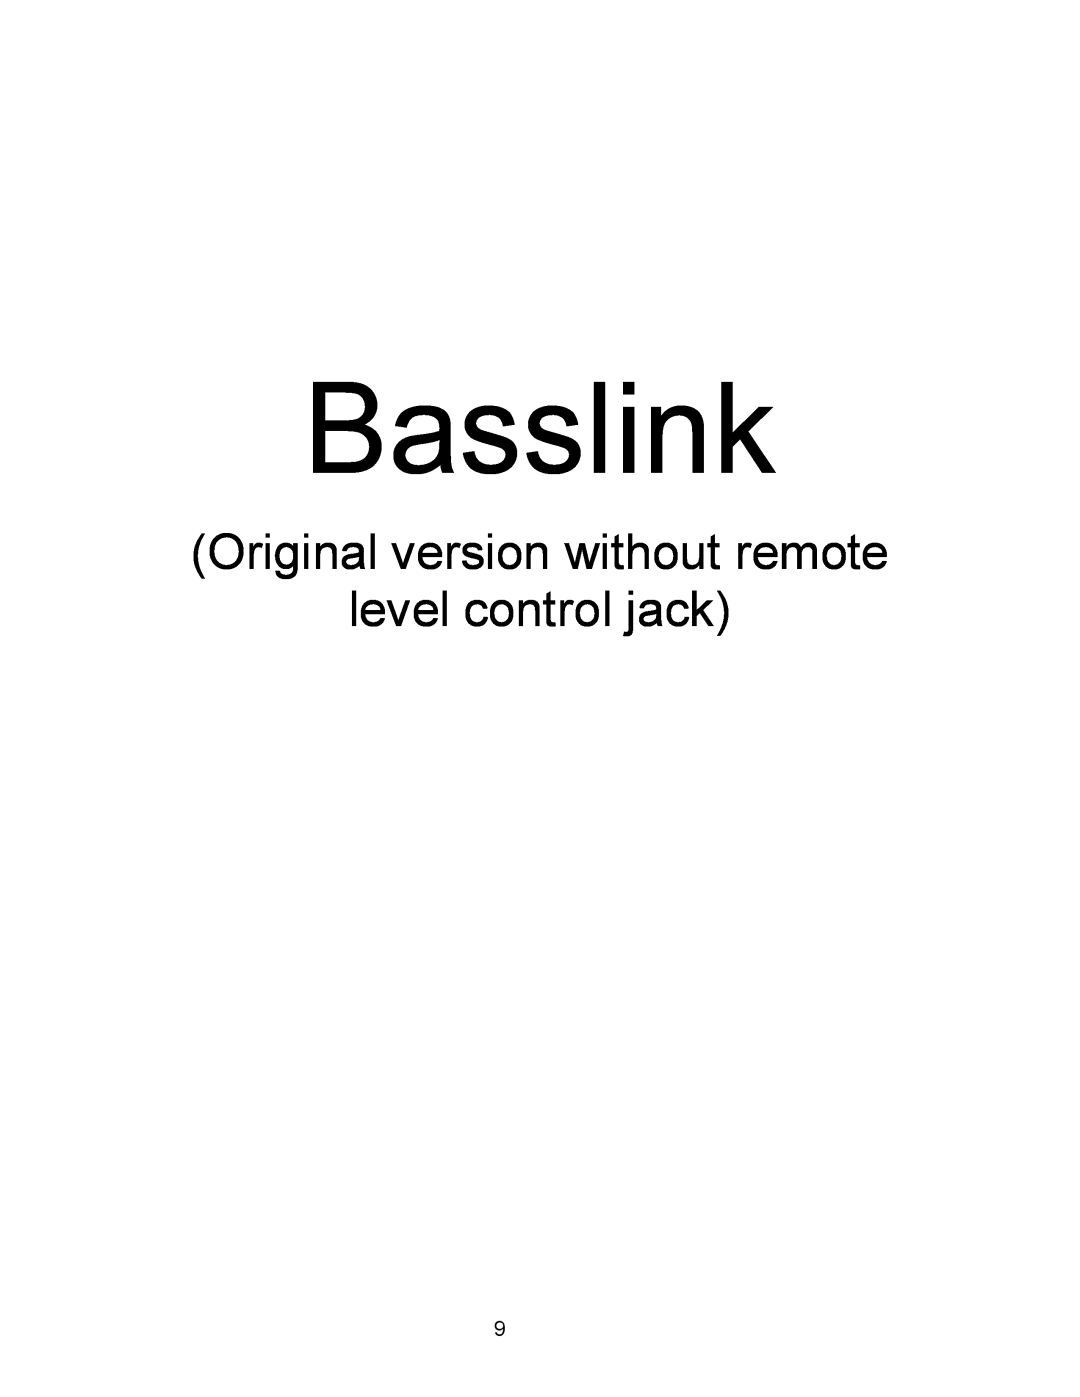 Infinity Bass Link service manual Basslink, Original version without remote, level control jack 